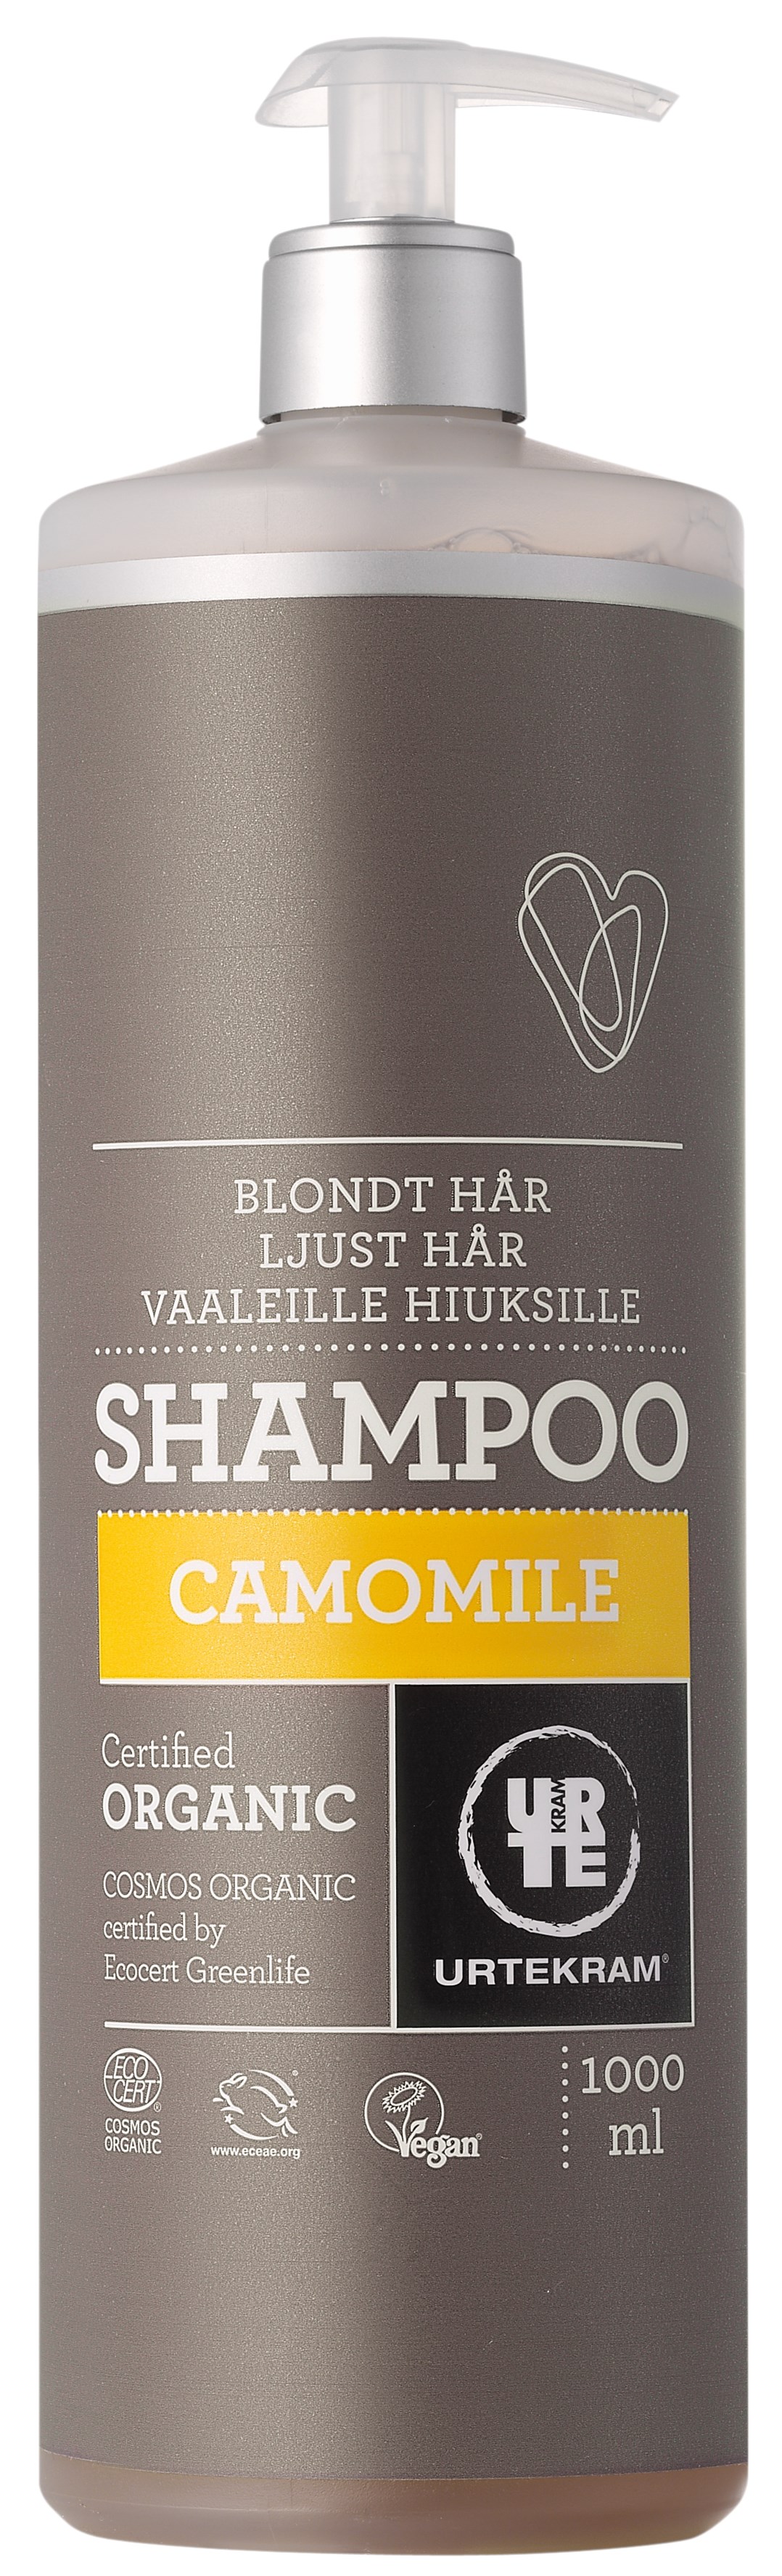 Urtekram Camomille Shampoo Blond Hair 1L